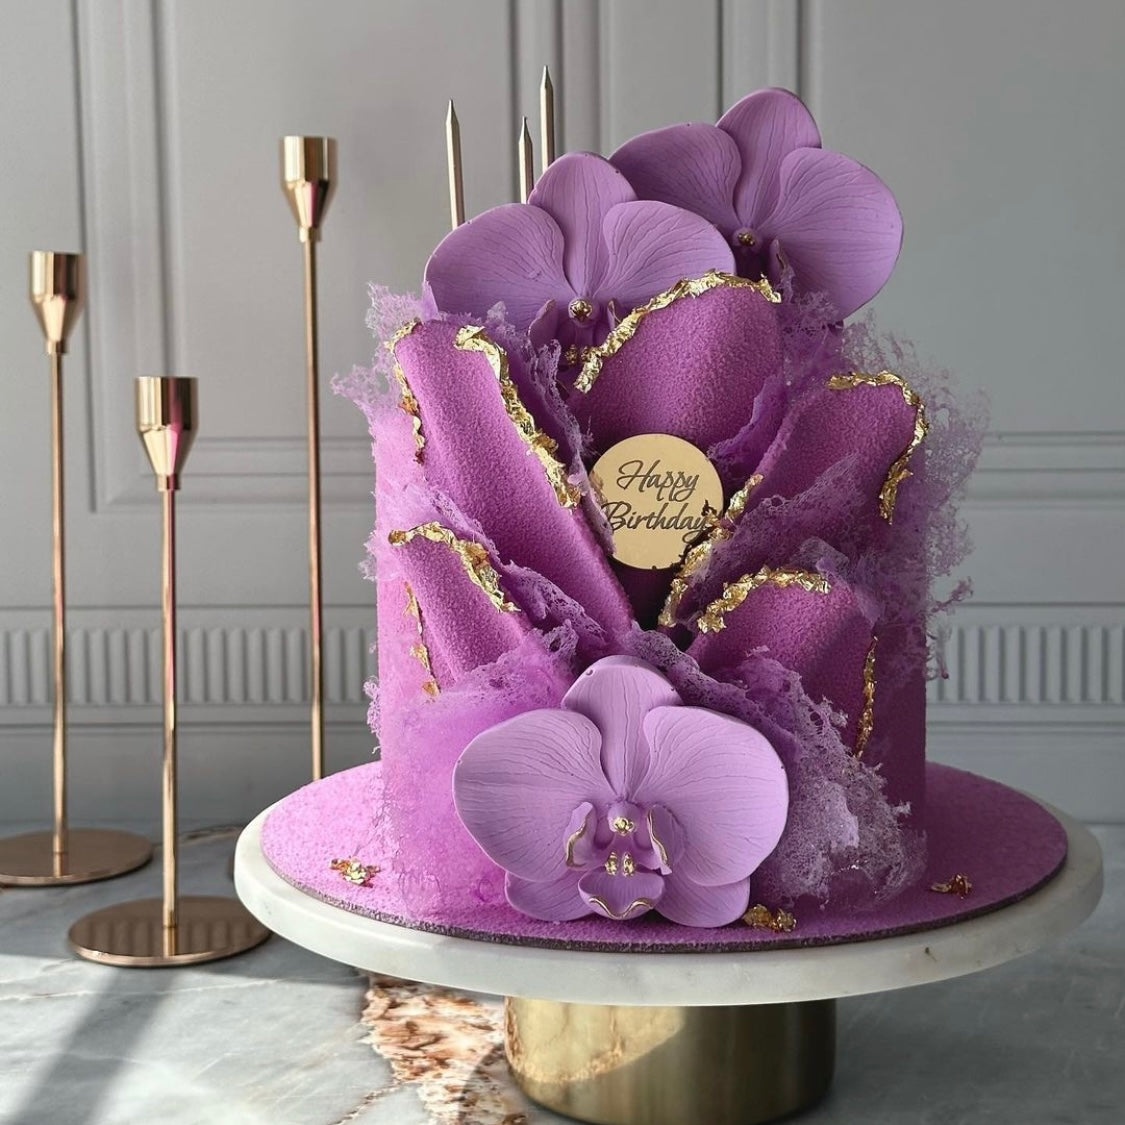 Blue Orchids Wedding Cake - Decorated Cake by Cake Your - CakesDecor